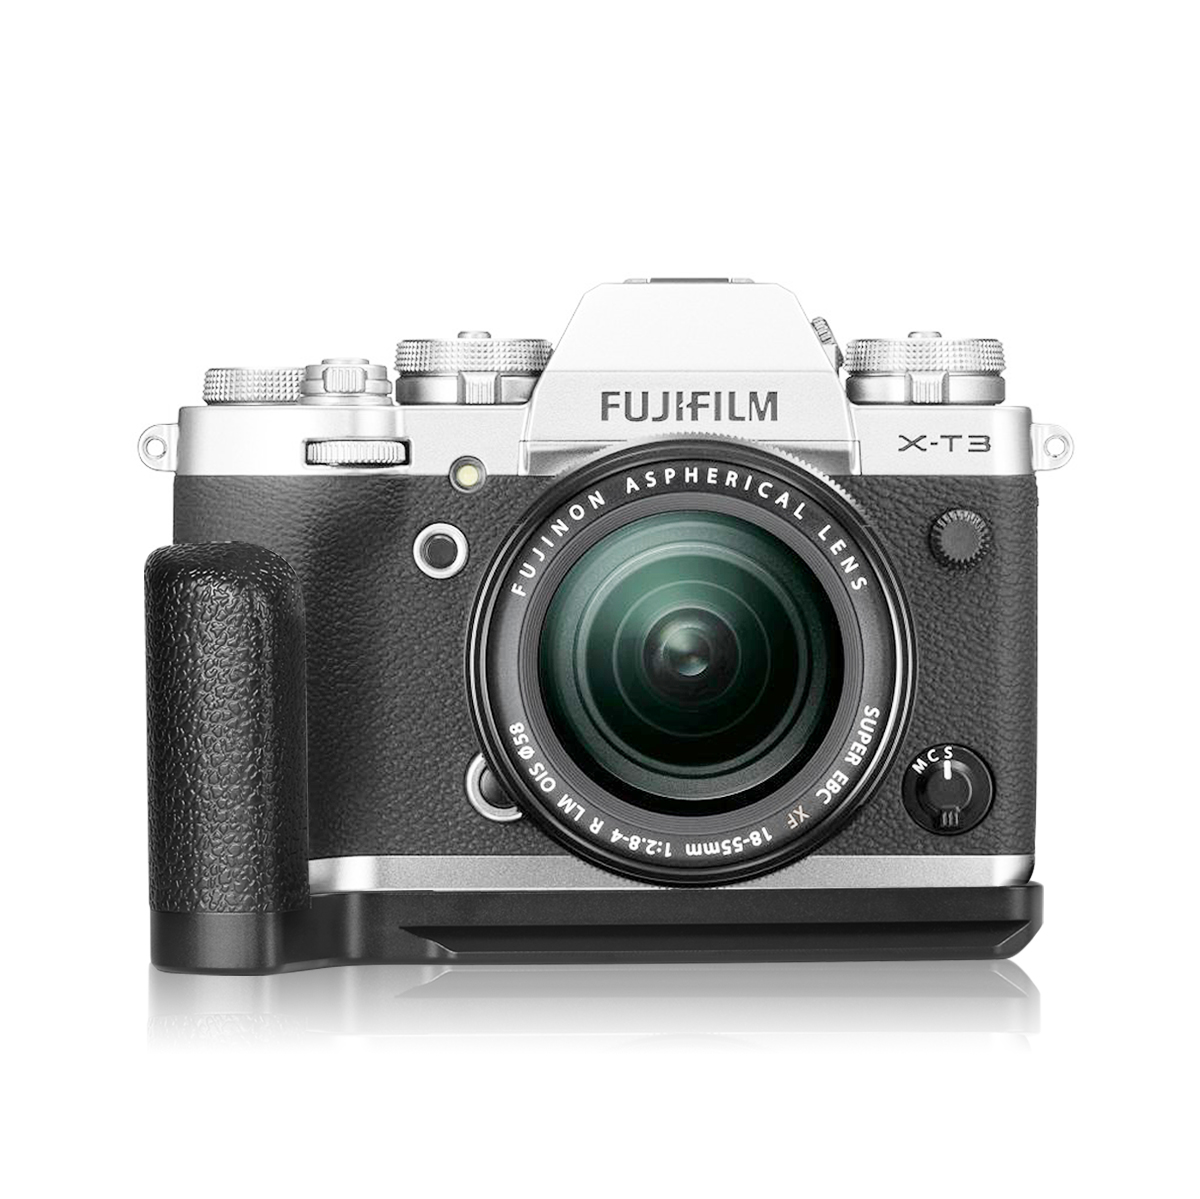 Meike Grip for Fujifilm XT1